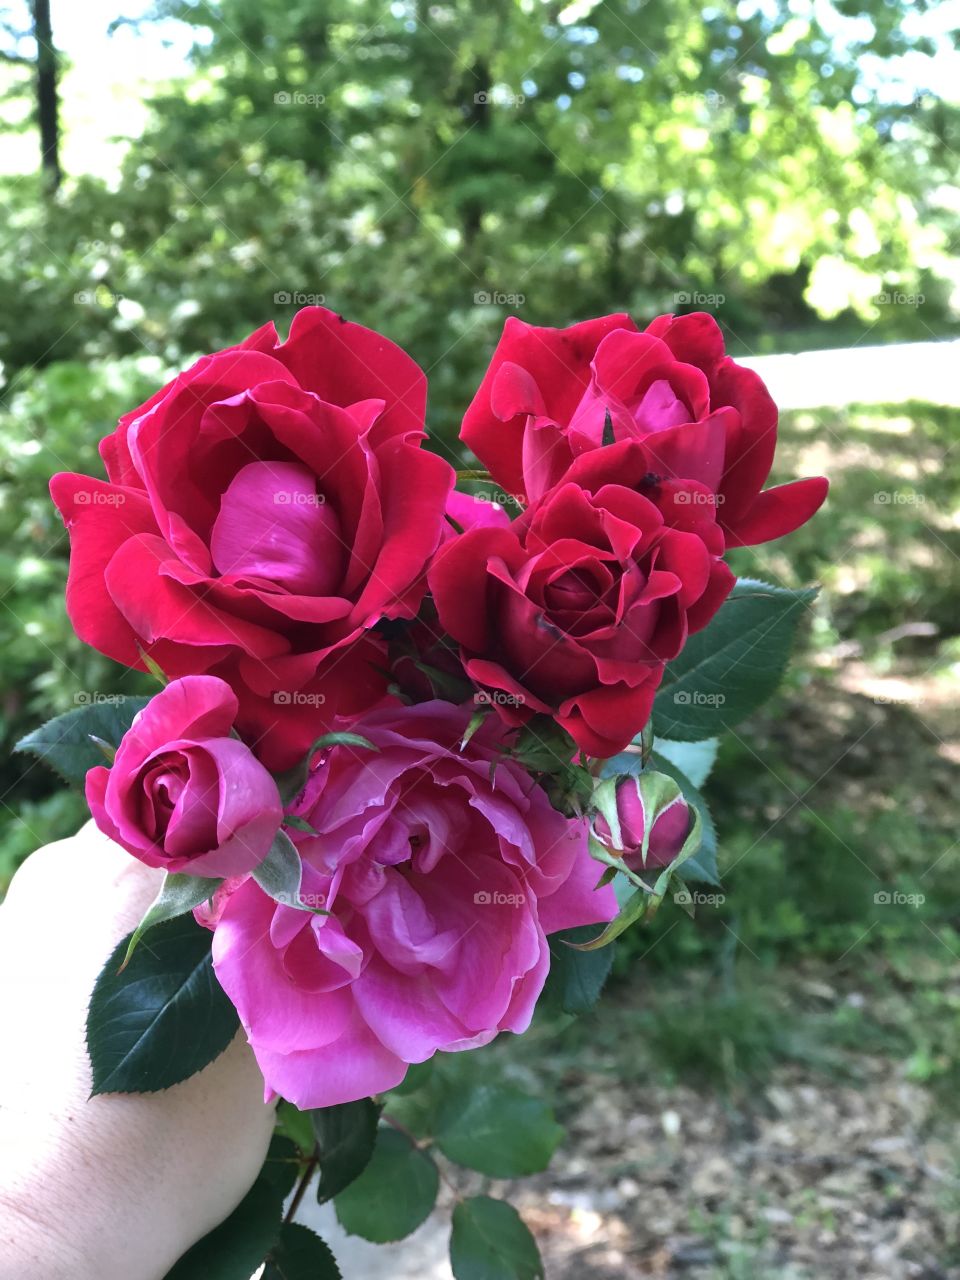 Fresh cut roses from the family garden